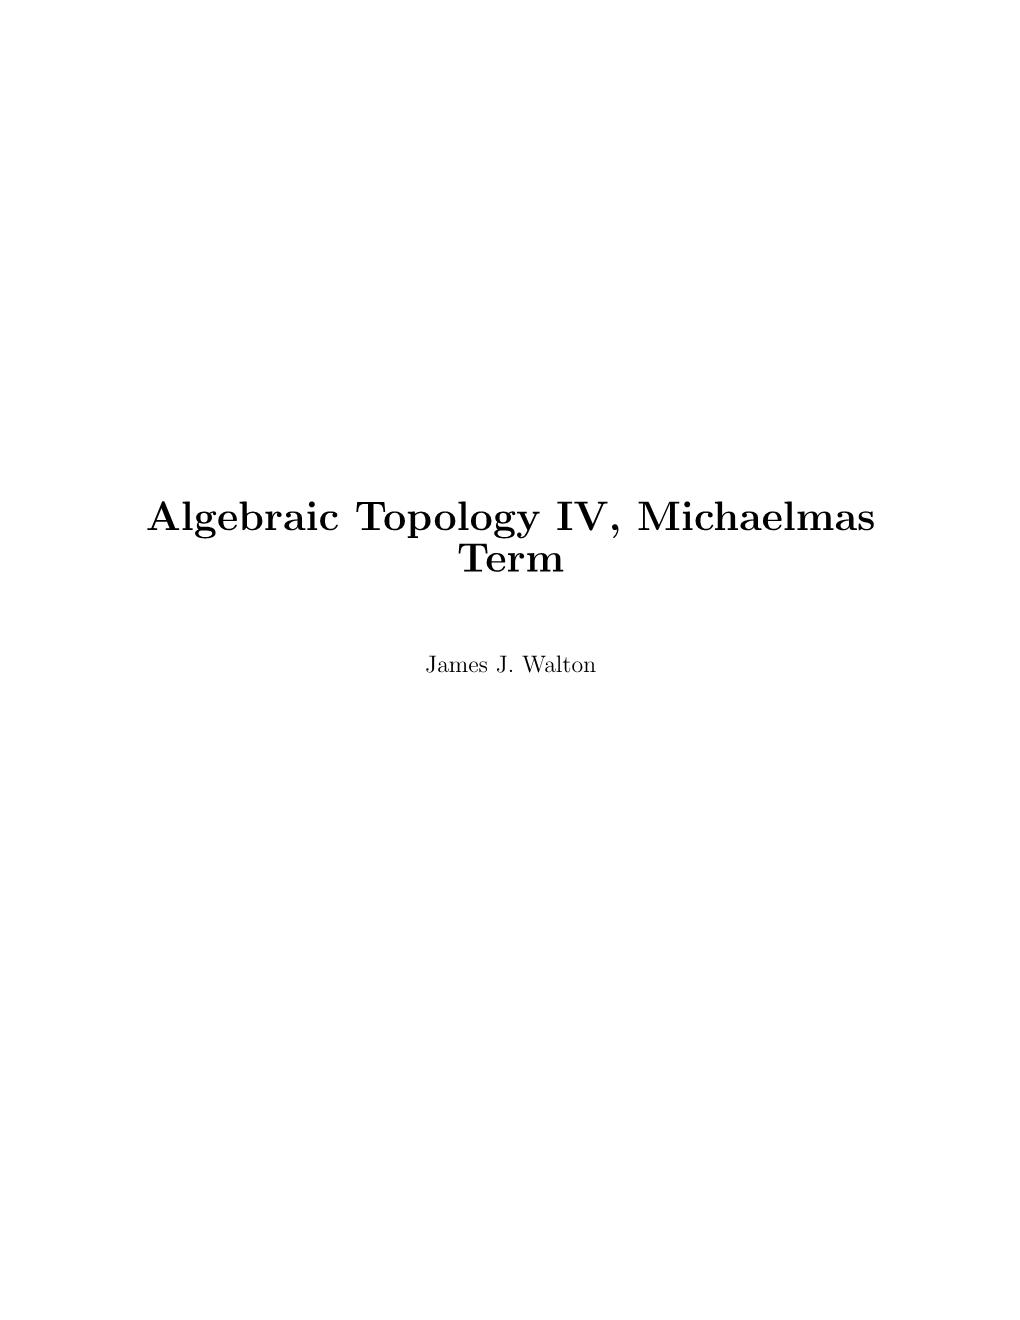 Algebraic Topology Notes